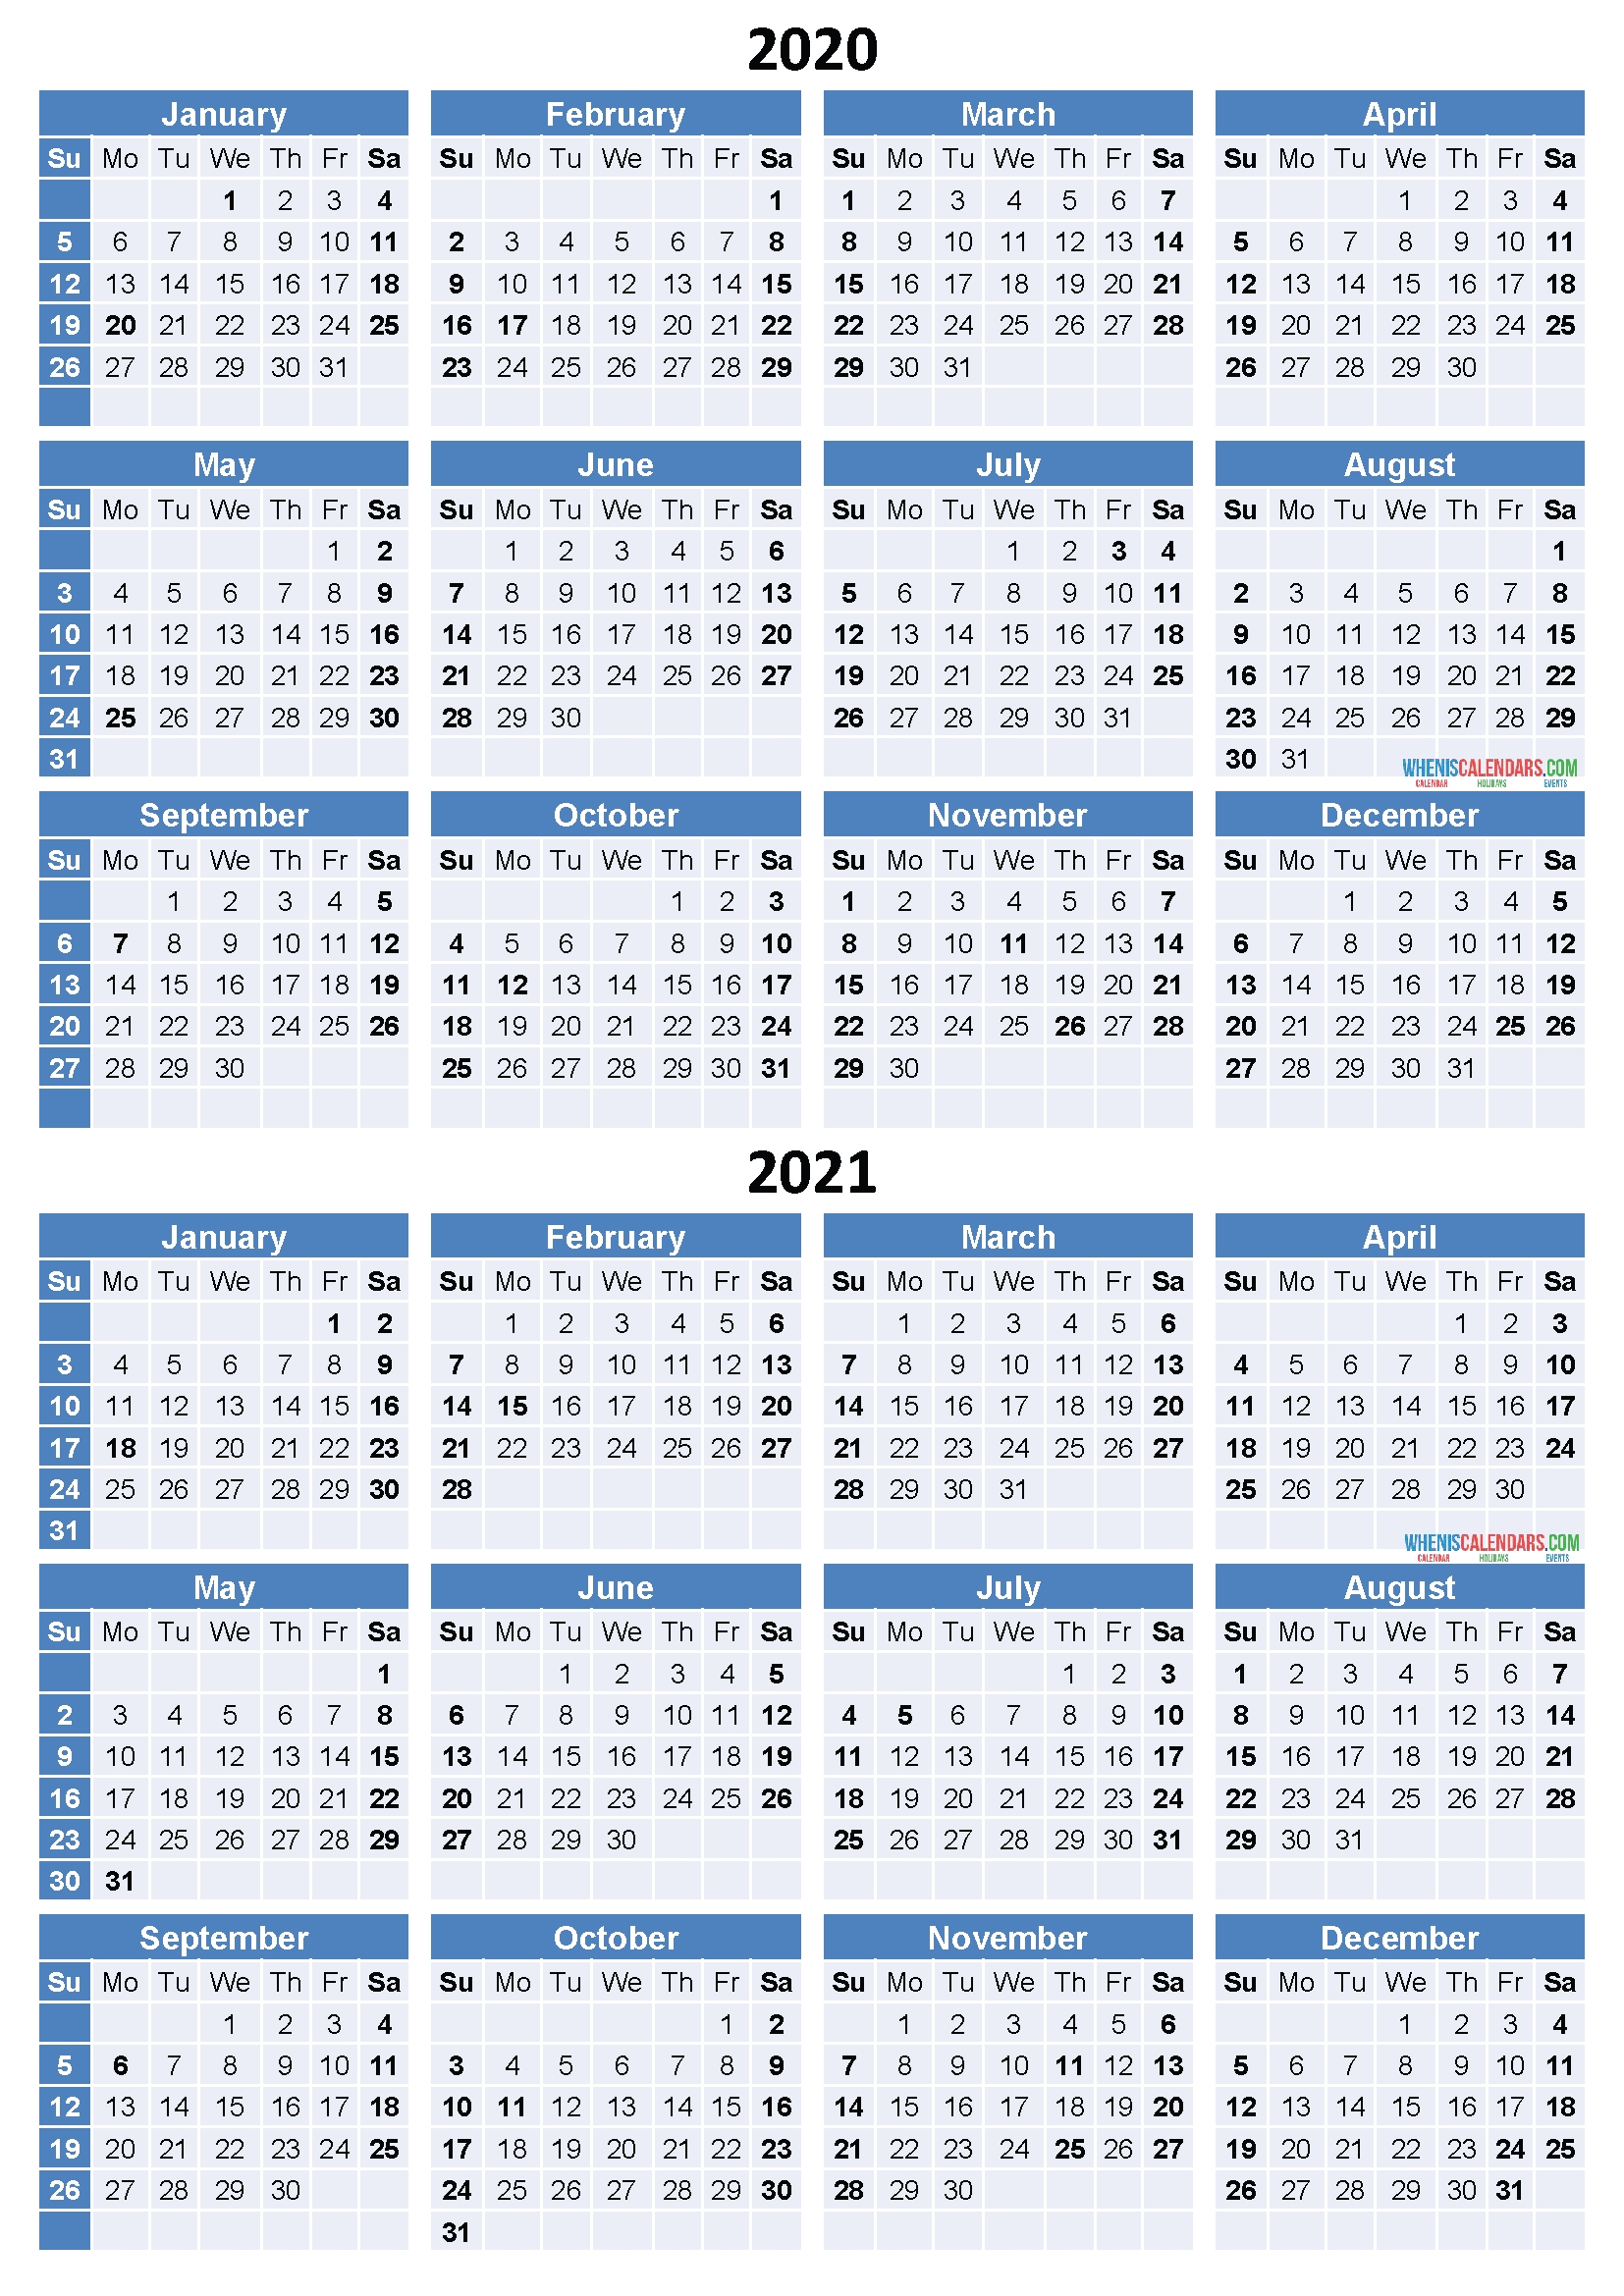 Depo Provera Calendar 2021 Printable | Calendar Printables ...